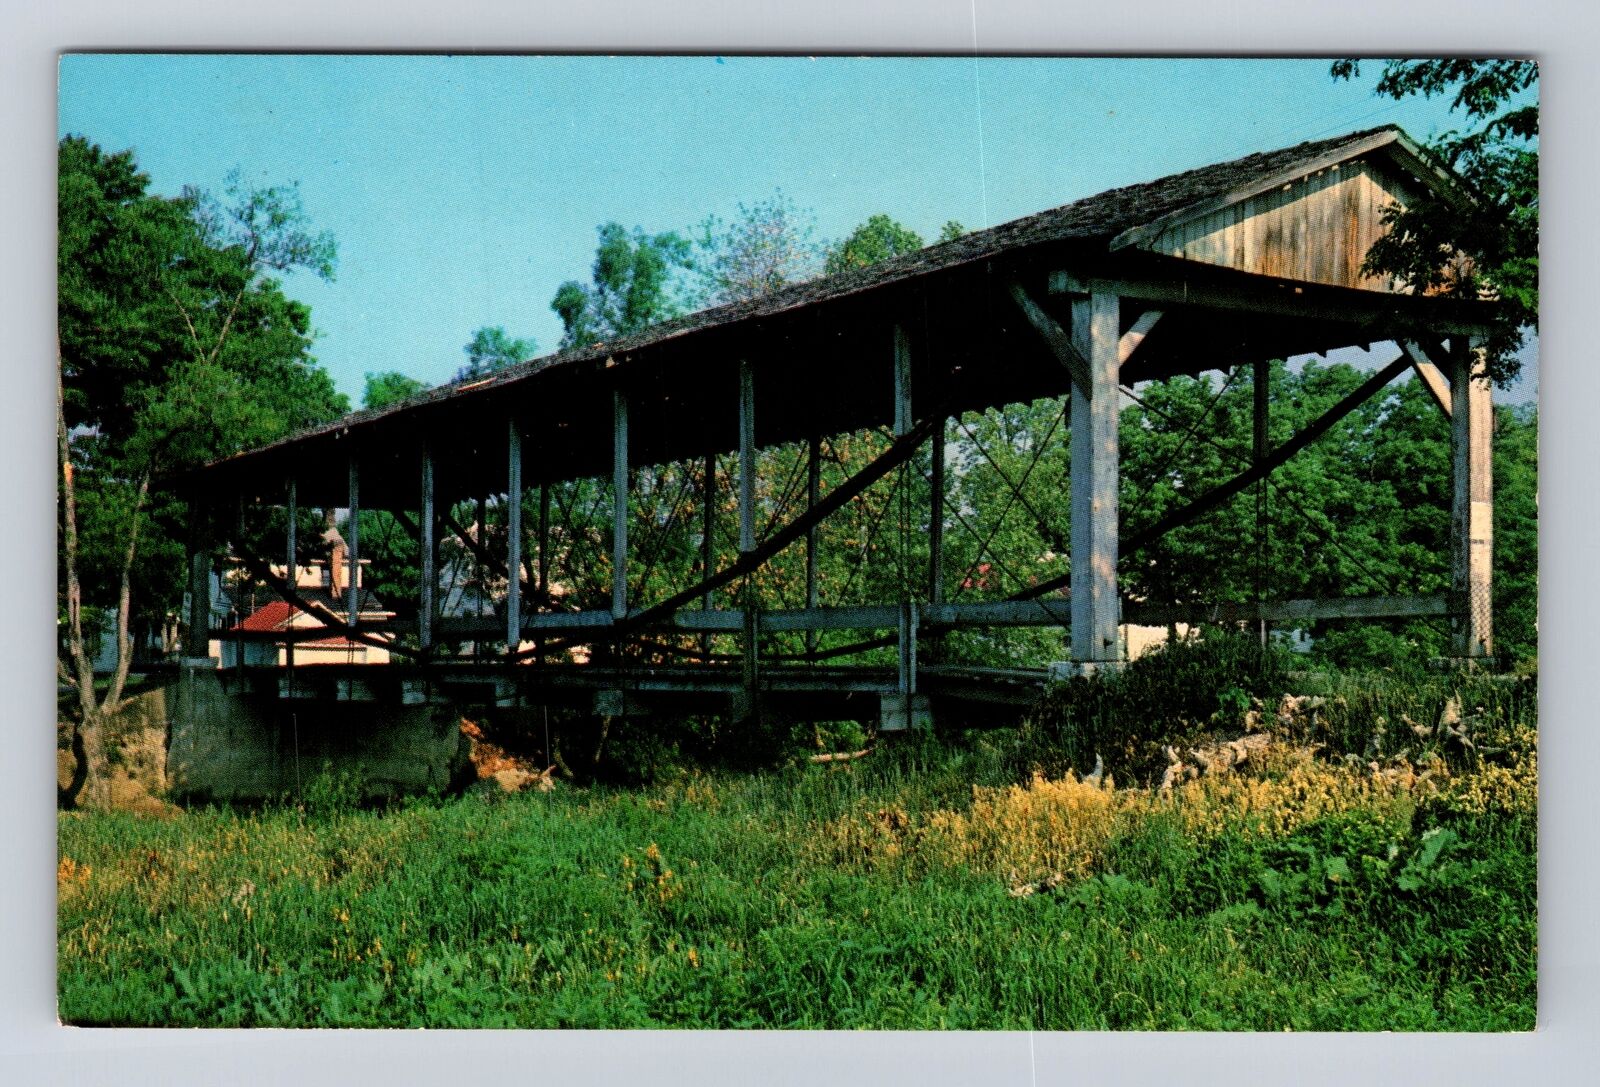 Germantown OH-Ohio, Inverted Bowstring Covered Bridge, Vintage Souvenir Postcard